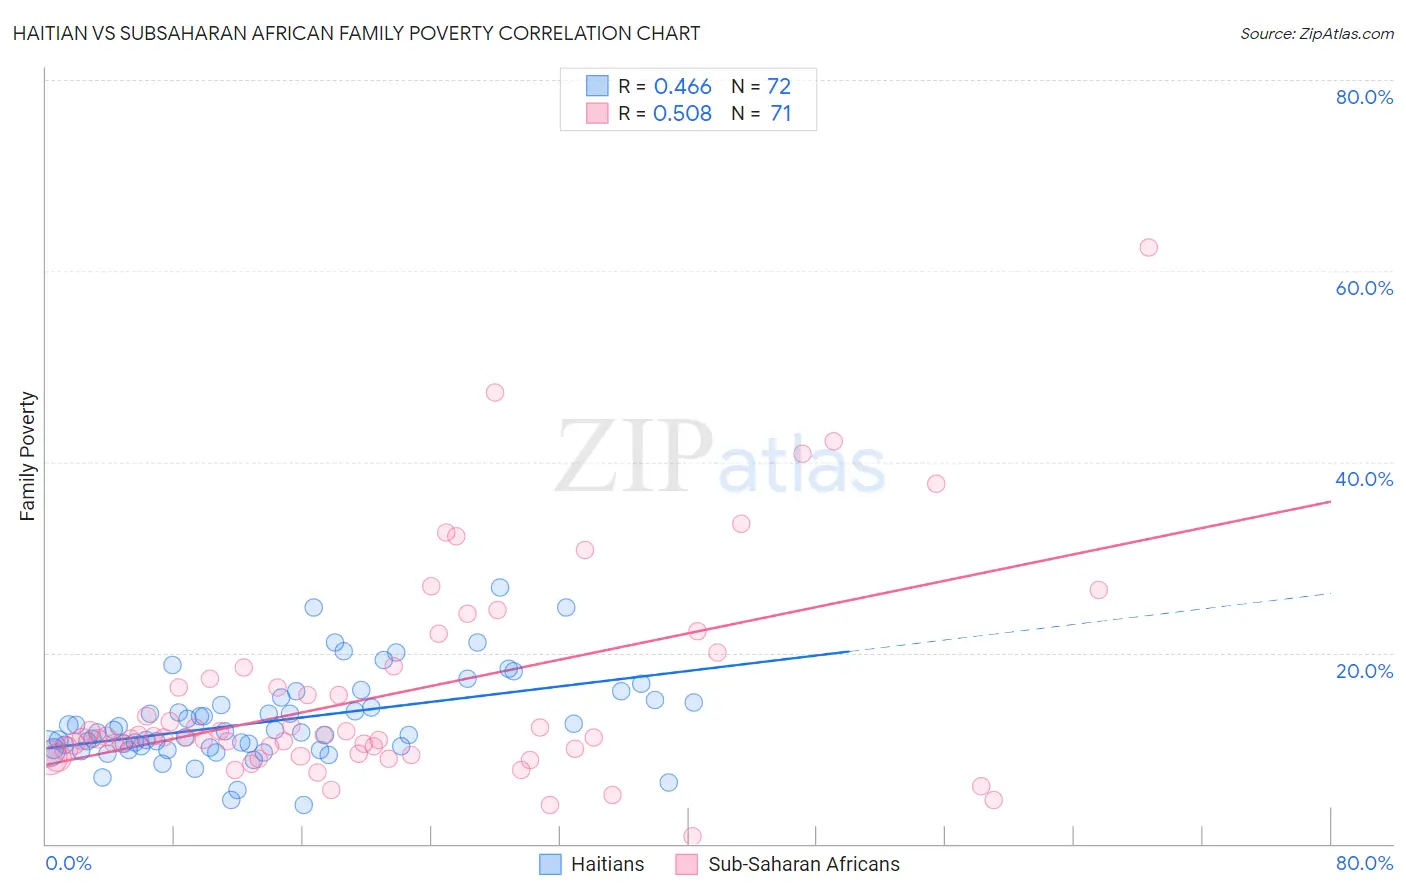 Haitian vs Subsaharan African Family Poverty